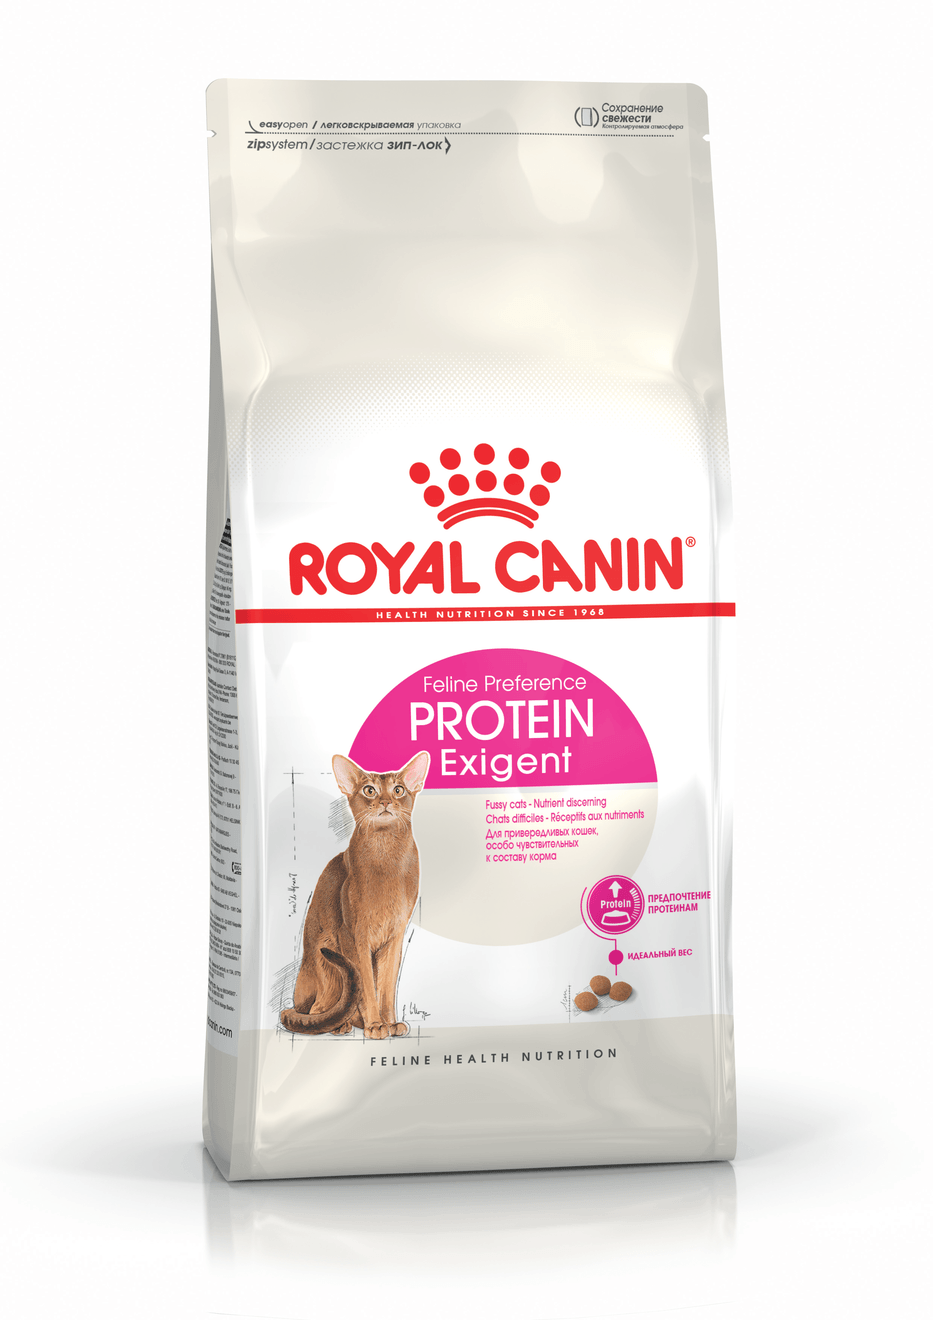 【Royal Canin】法國皇家貓乾糧 - 成貓蛋白加强挑嘴配方 - Pet Pet Plaza